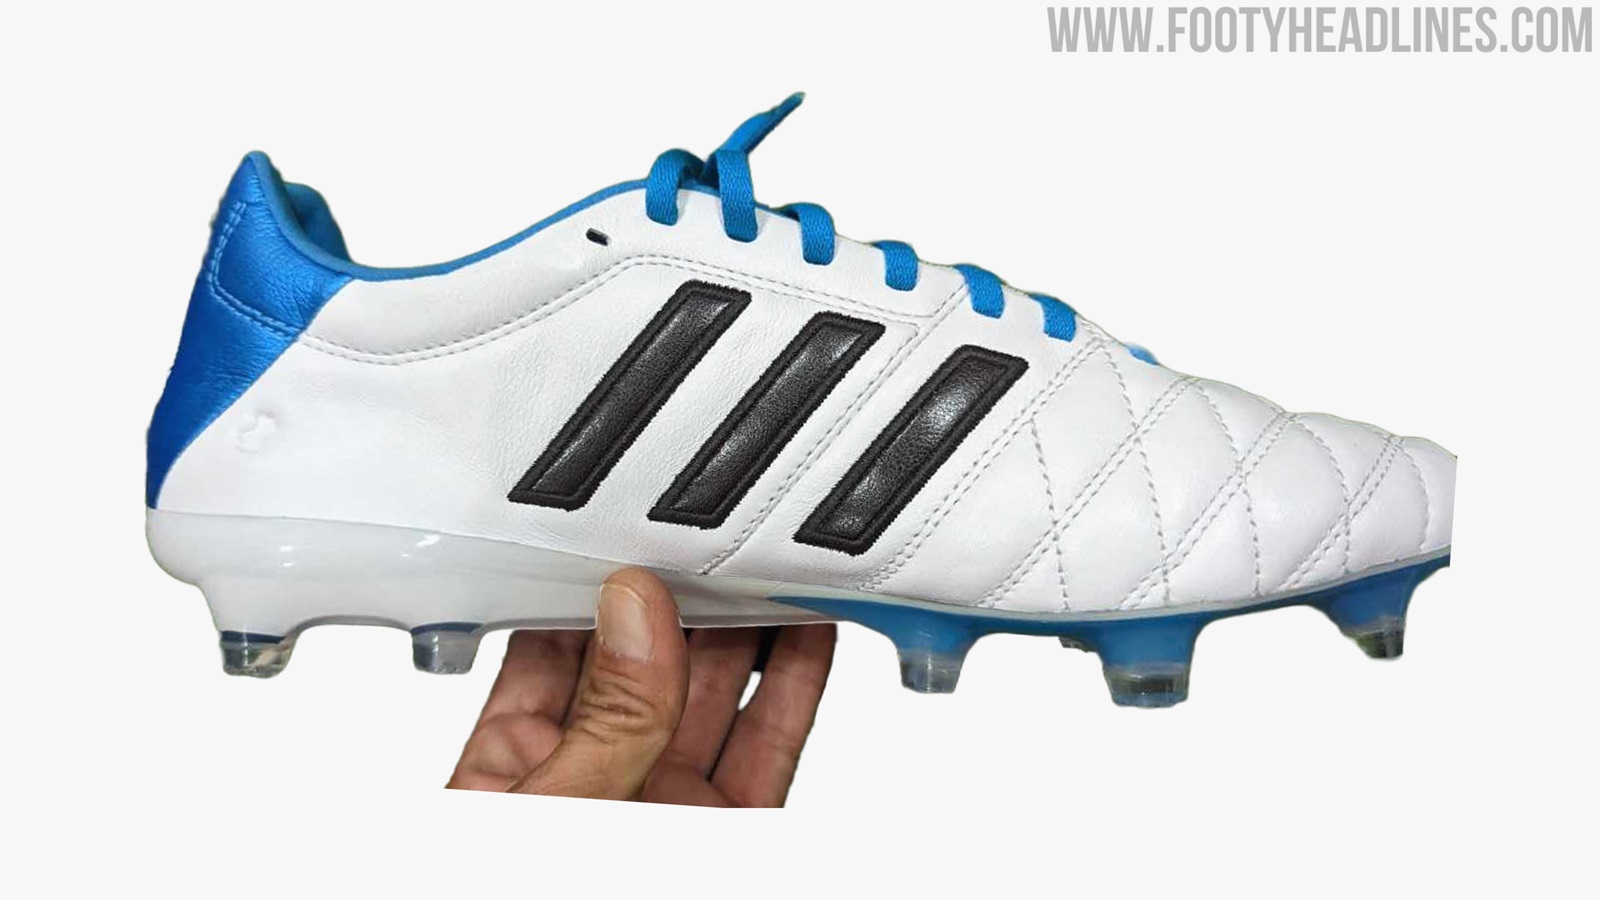 hovedlandet Svinde bort Fordeling New Pictures: Adidas Adipure 11pro Kroos Remake Boots Leaked - Footy  Headlines